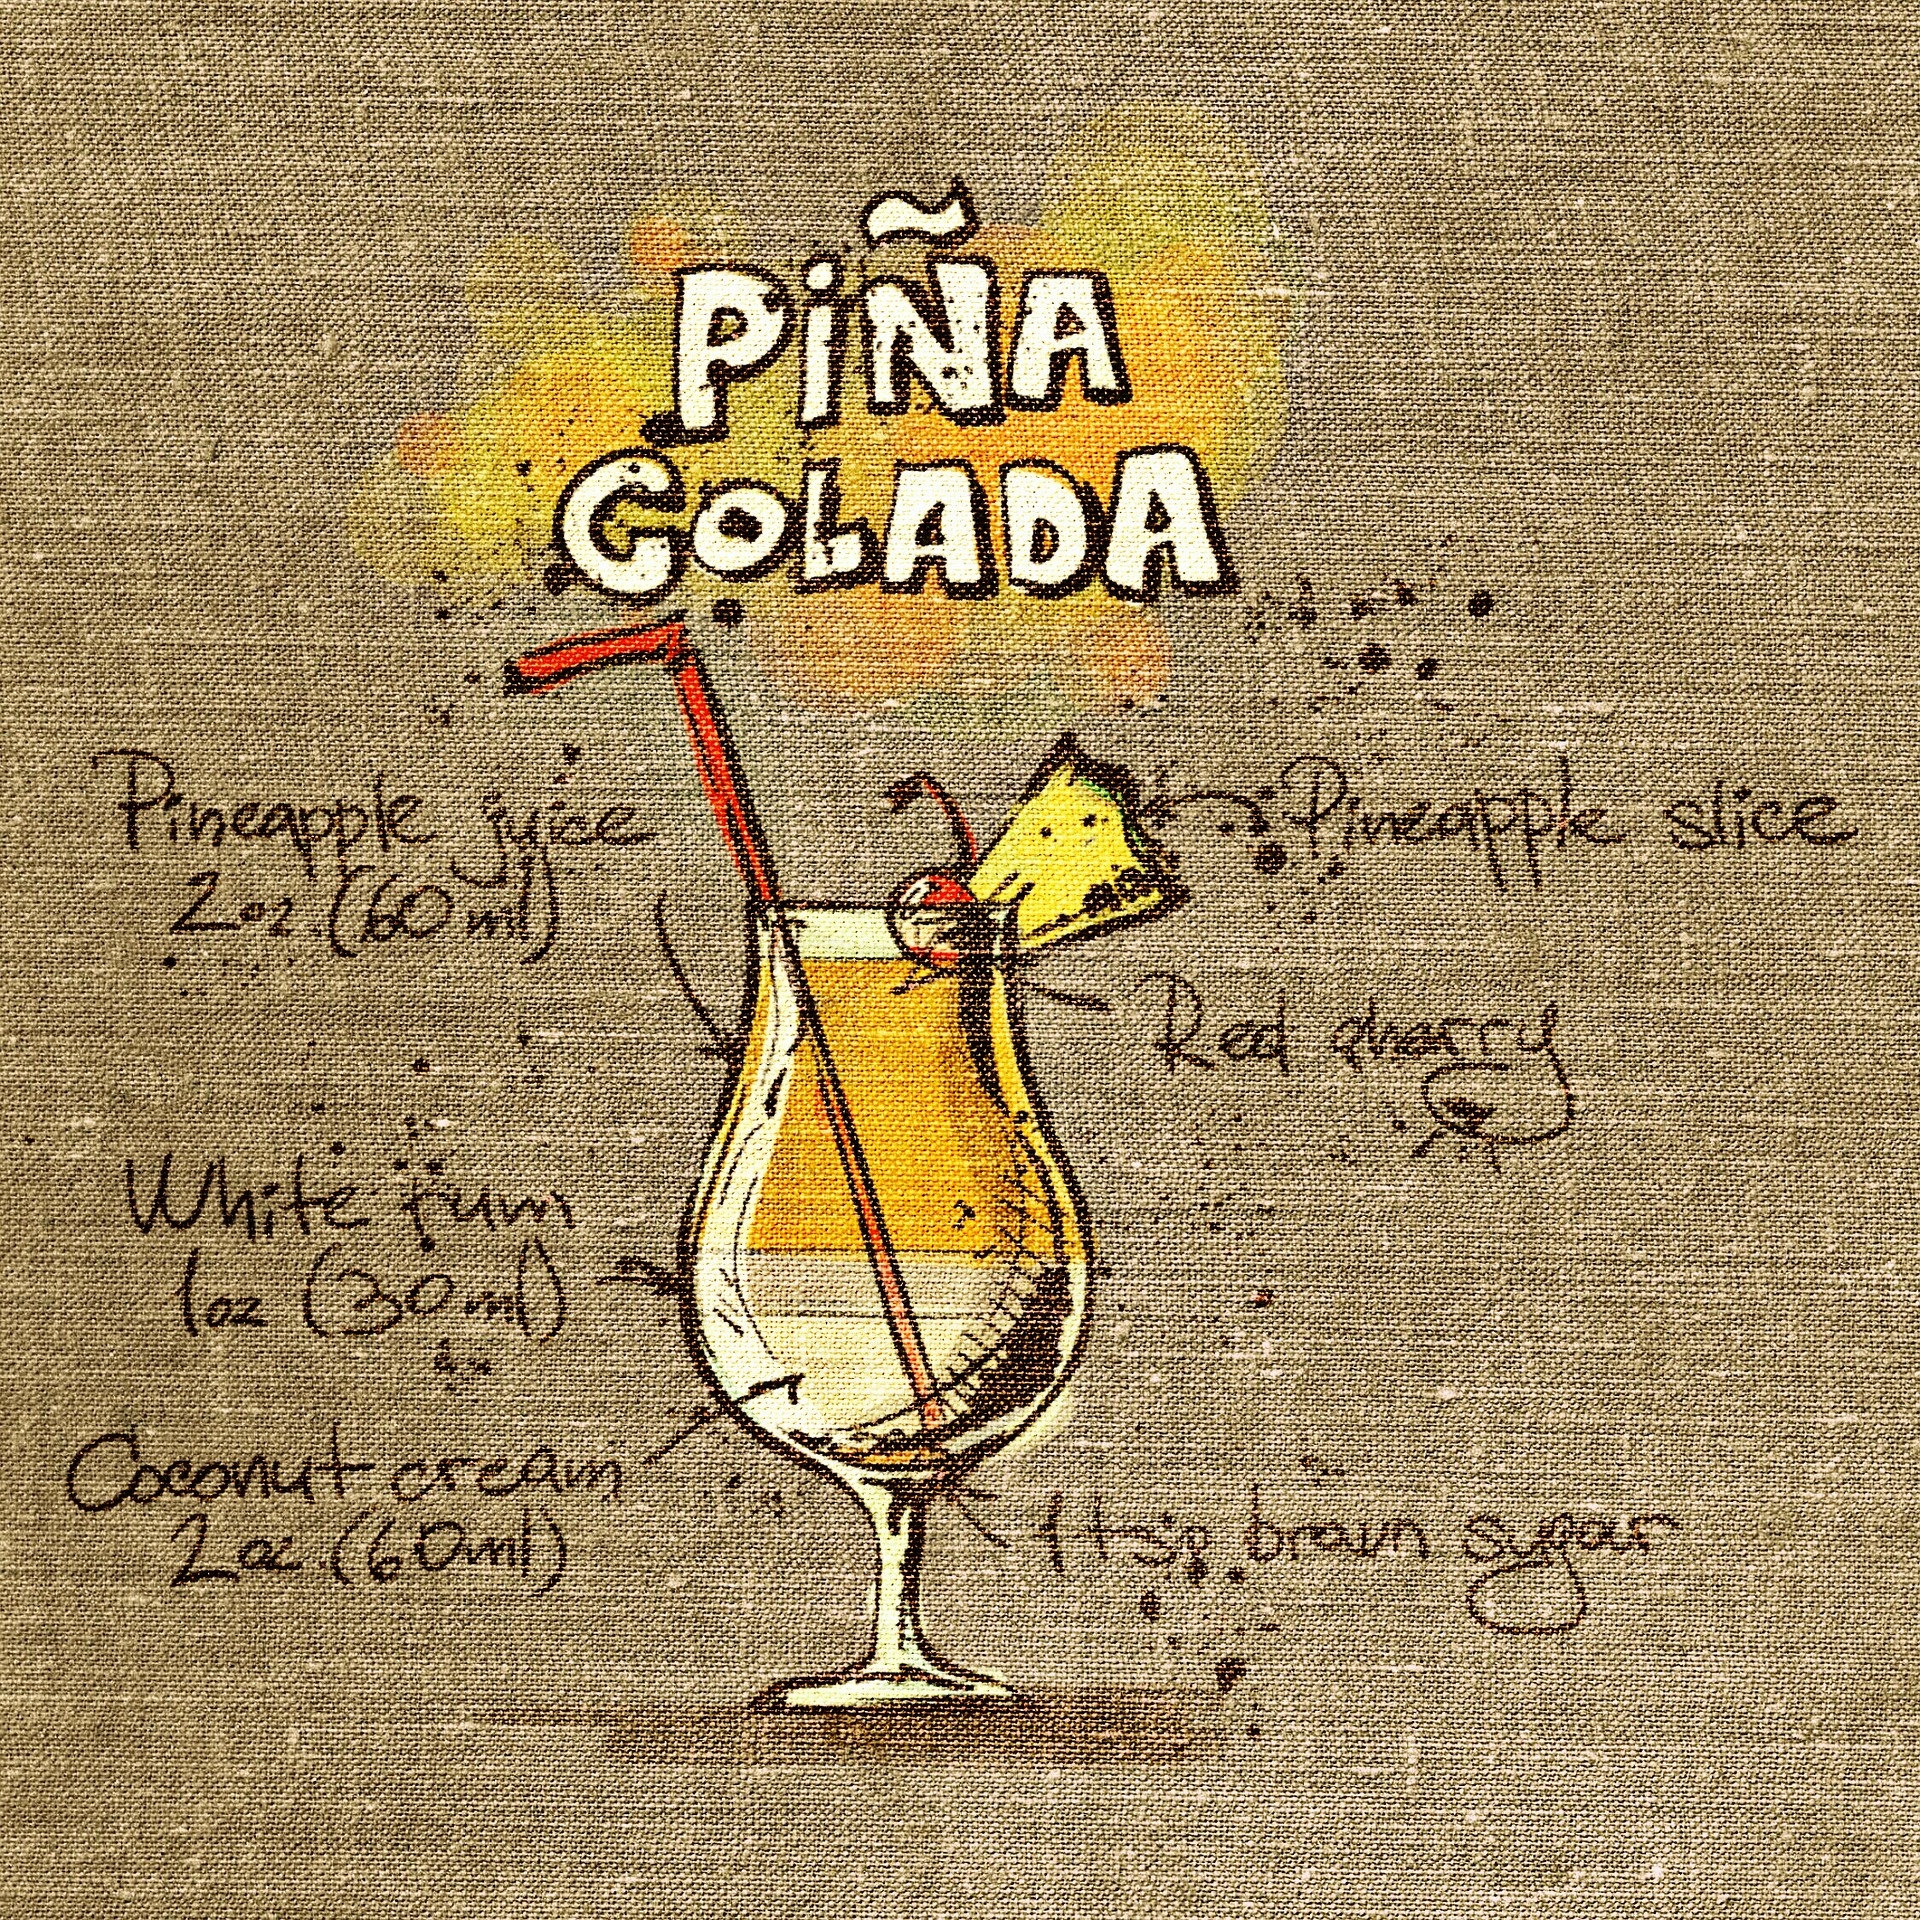 pina-colada-1184221_1920